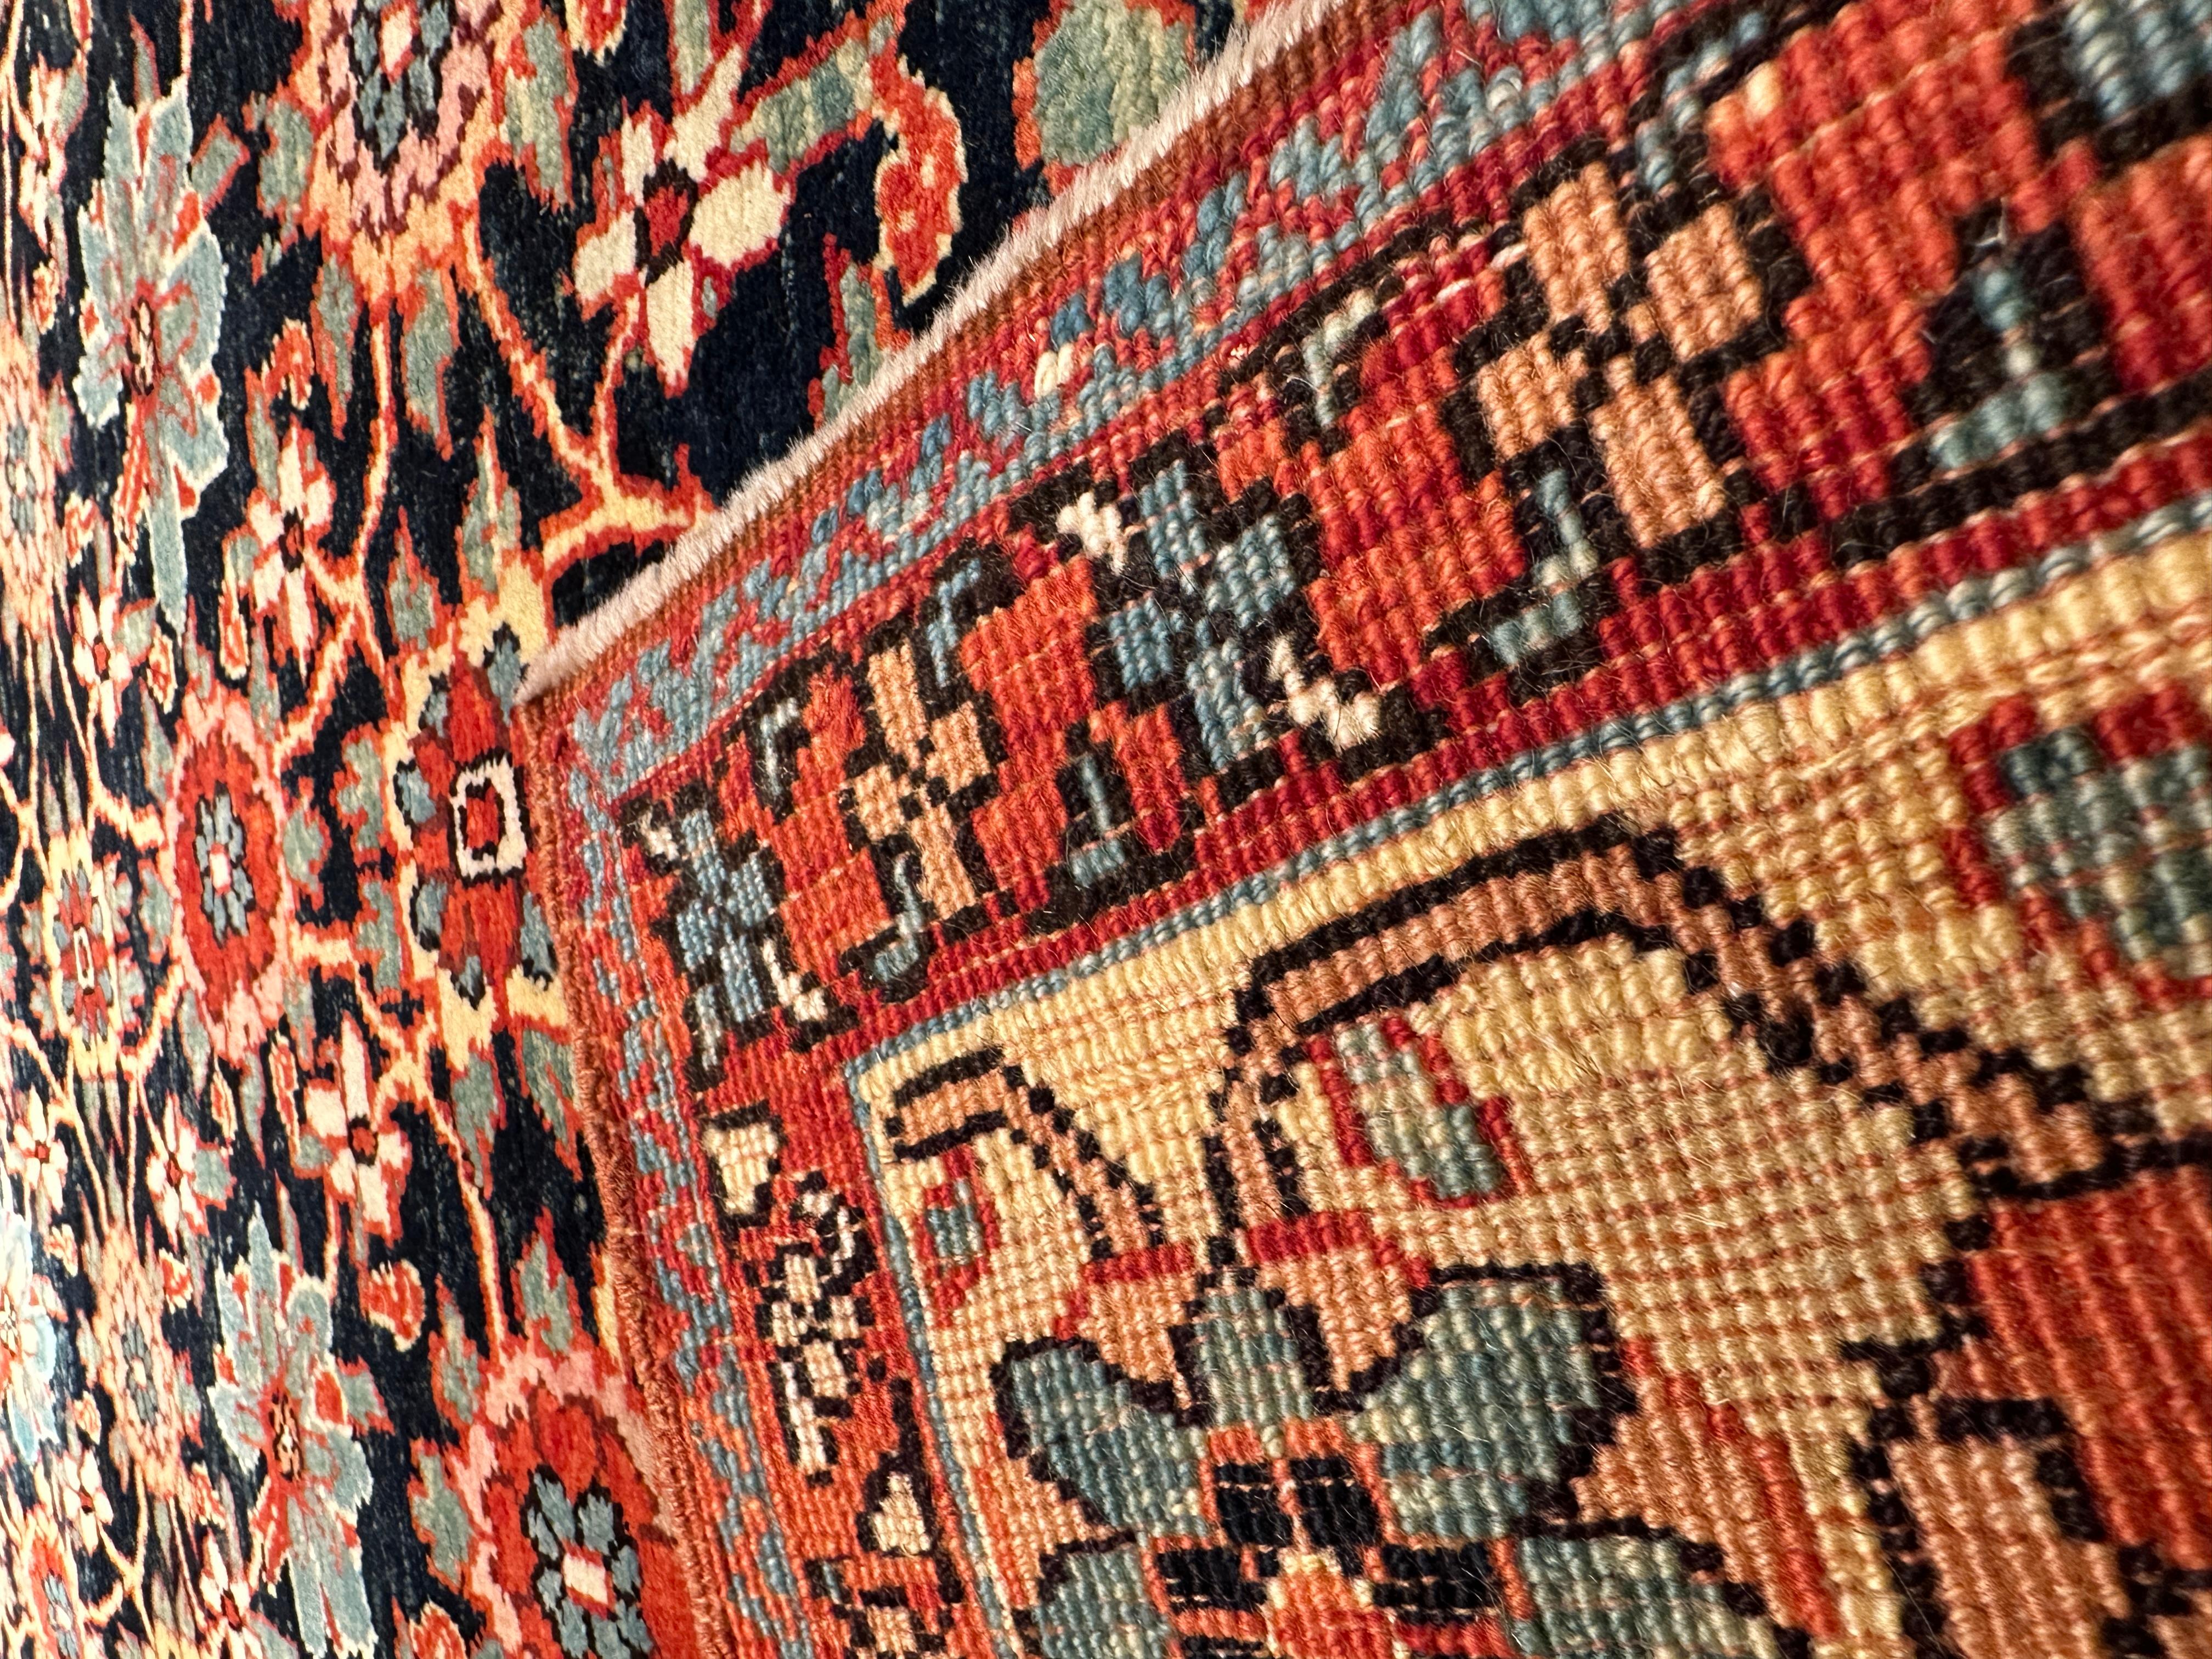 Turkish Ararat Rugs Mina Khani Rug, 19th Century Persian Revival Carpet, Natural Dyed For Sale